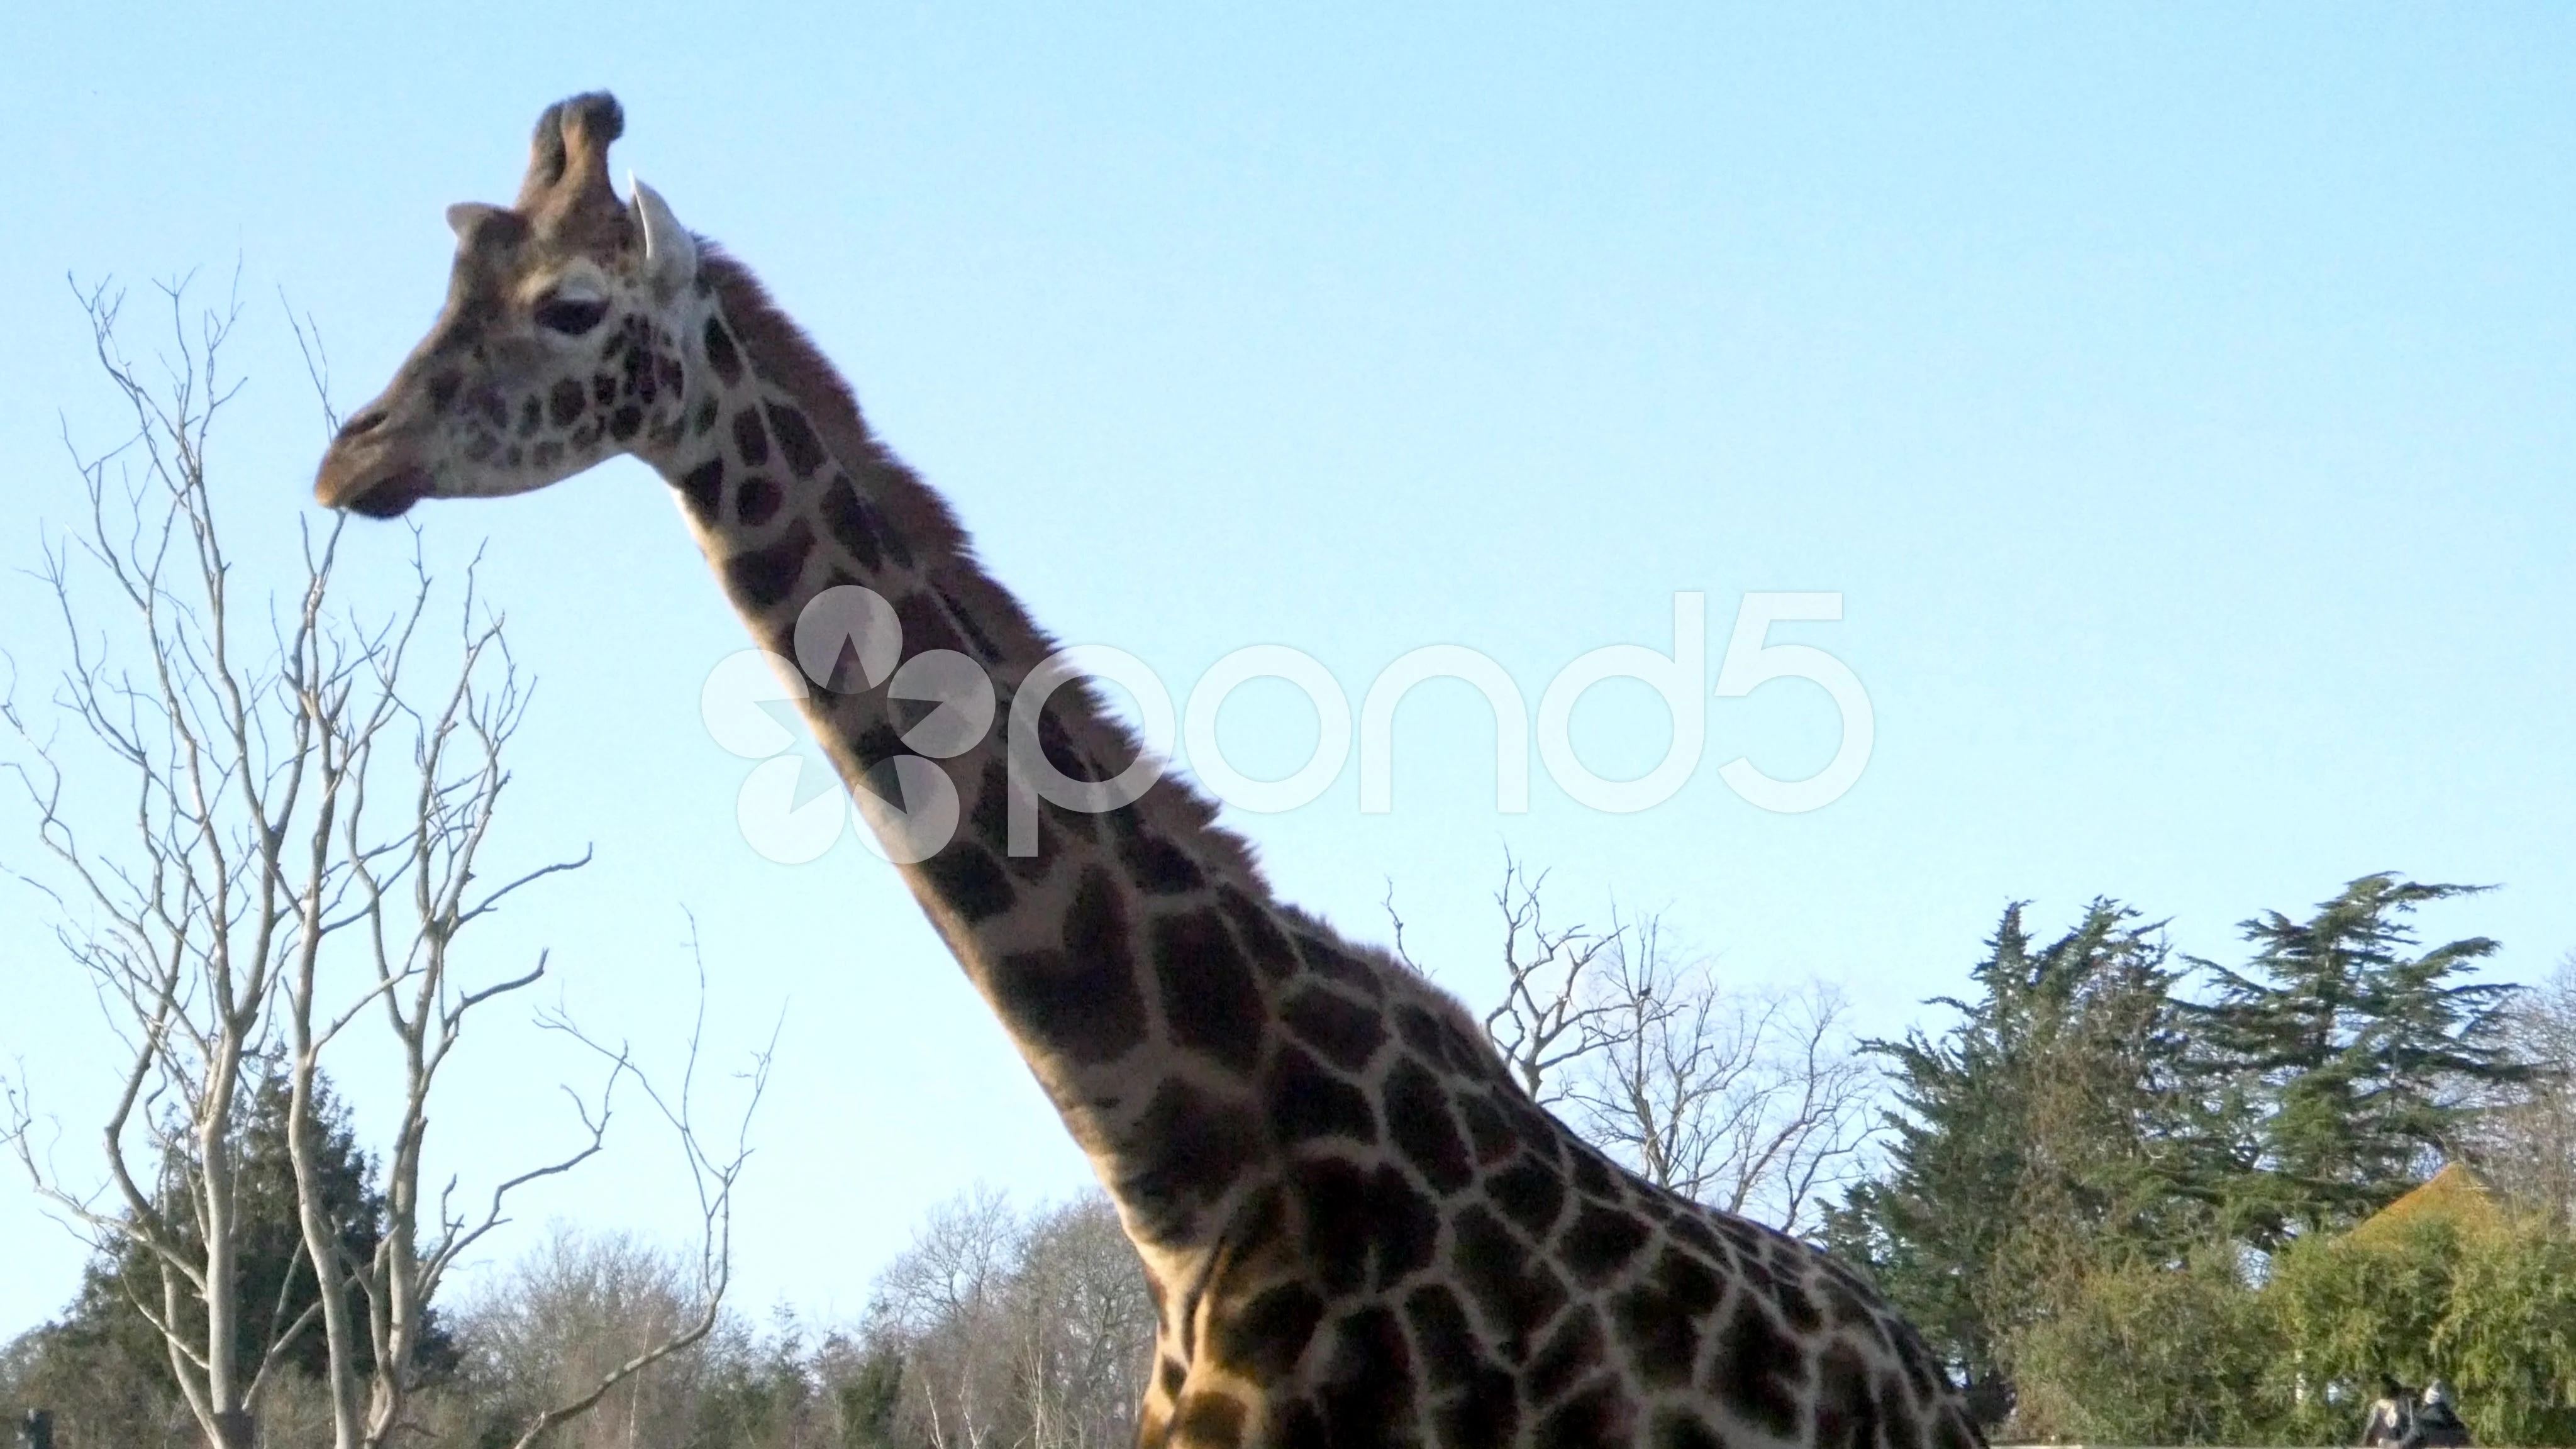 awesome giraffe